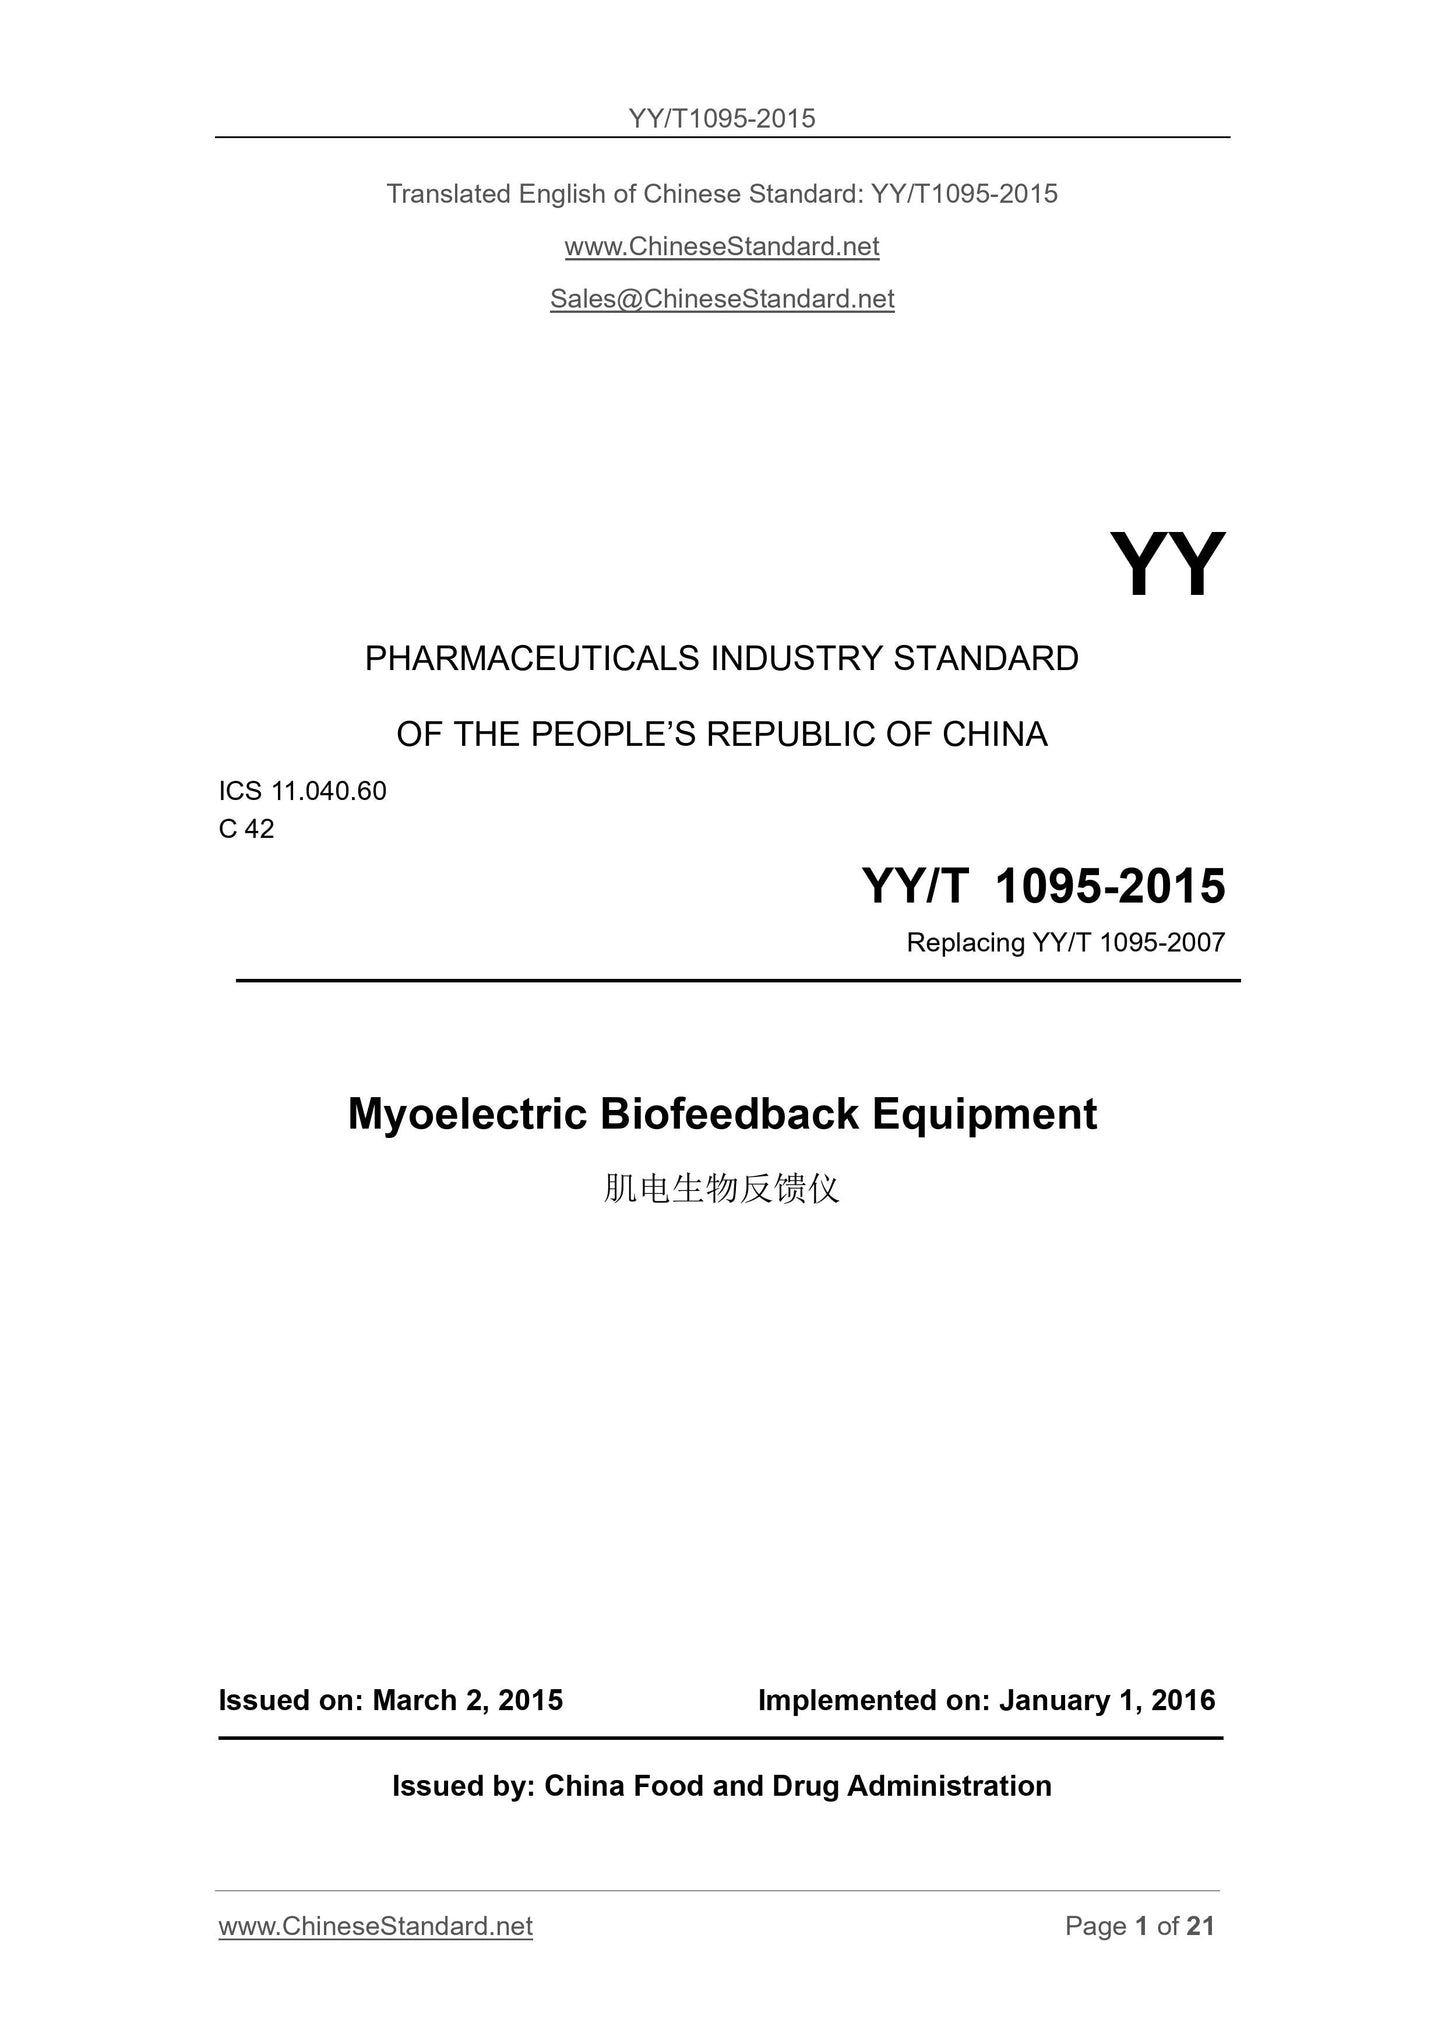 YY/T 1095-2015 Page 1